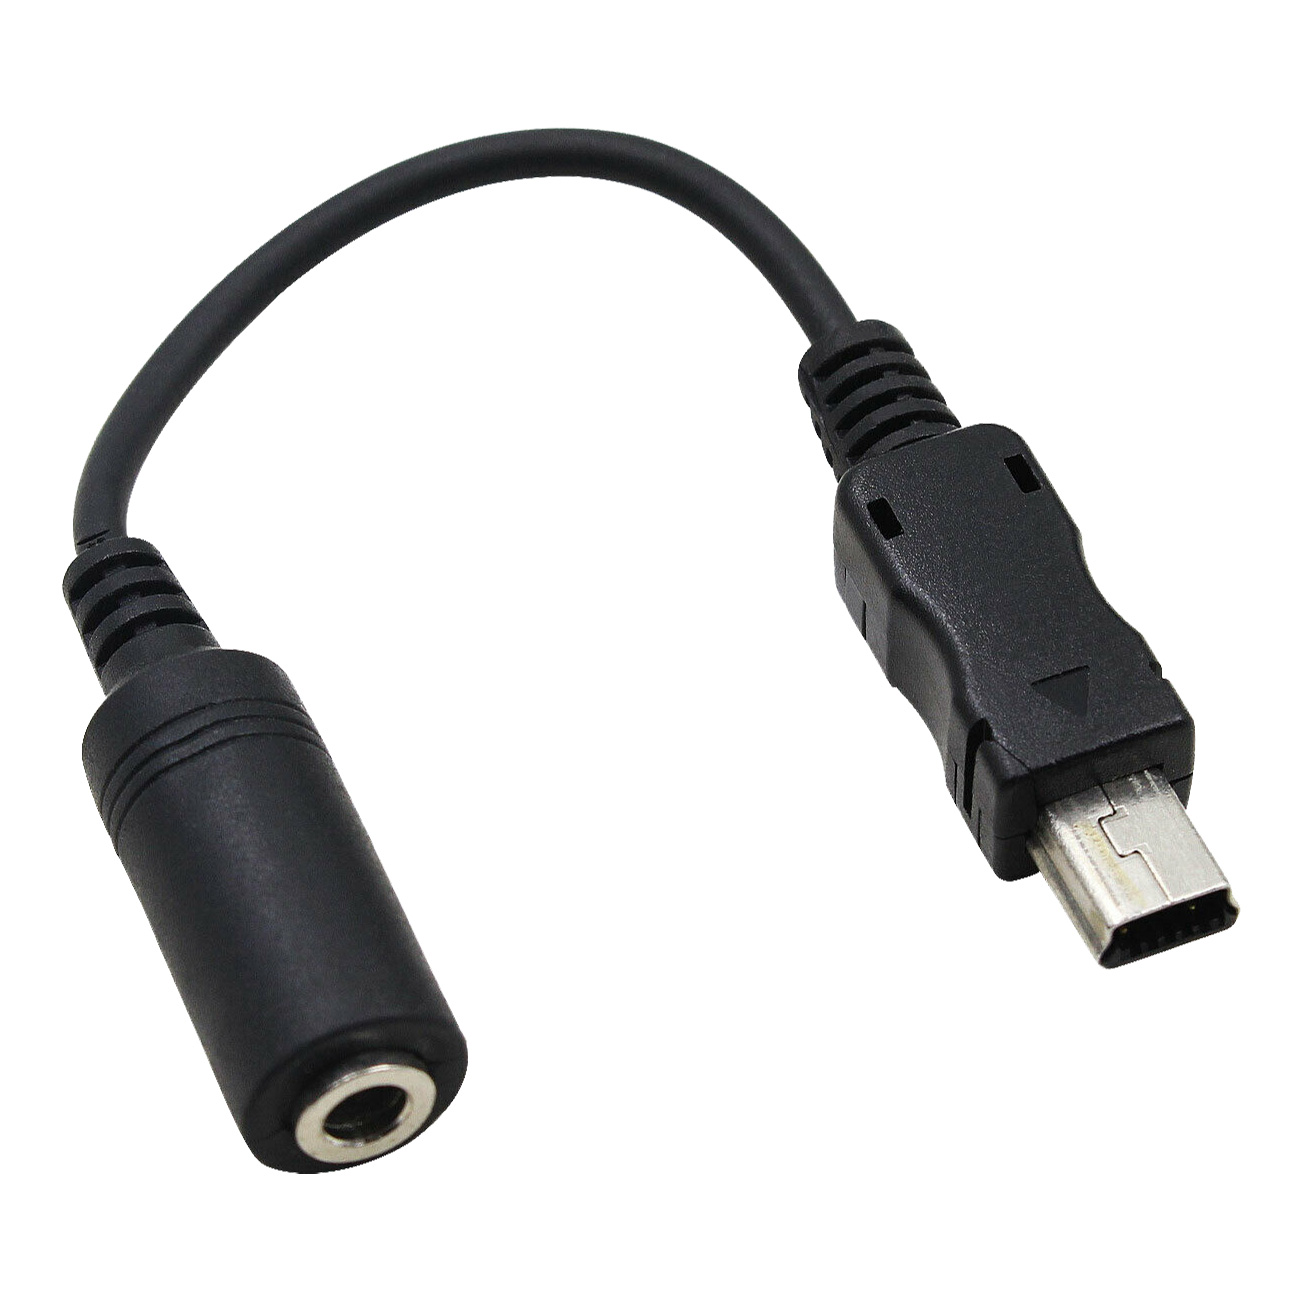  mini USB - jack 3.5 мм для наушников, гарнитуры